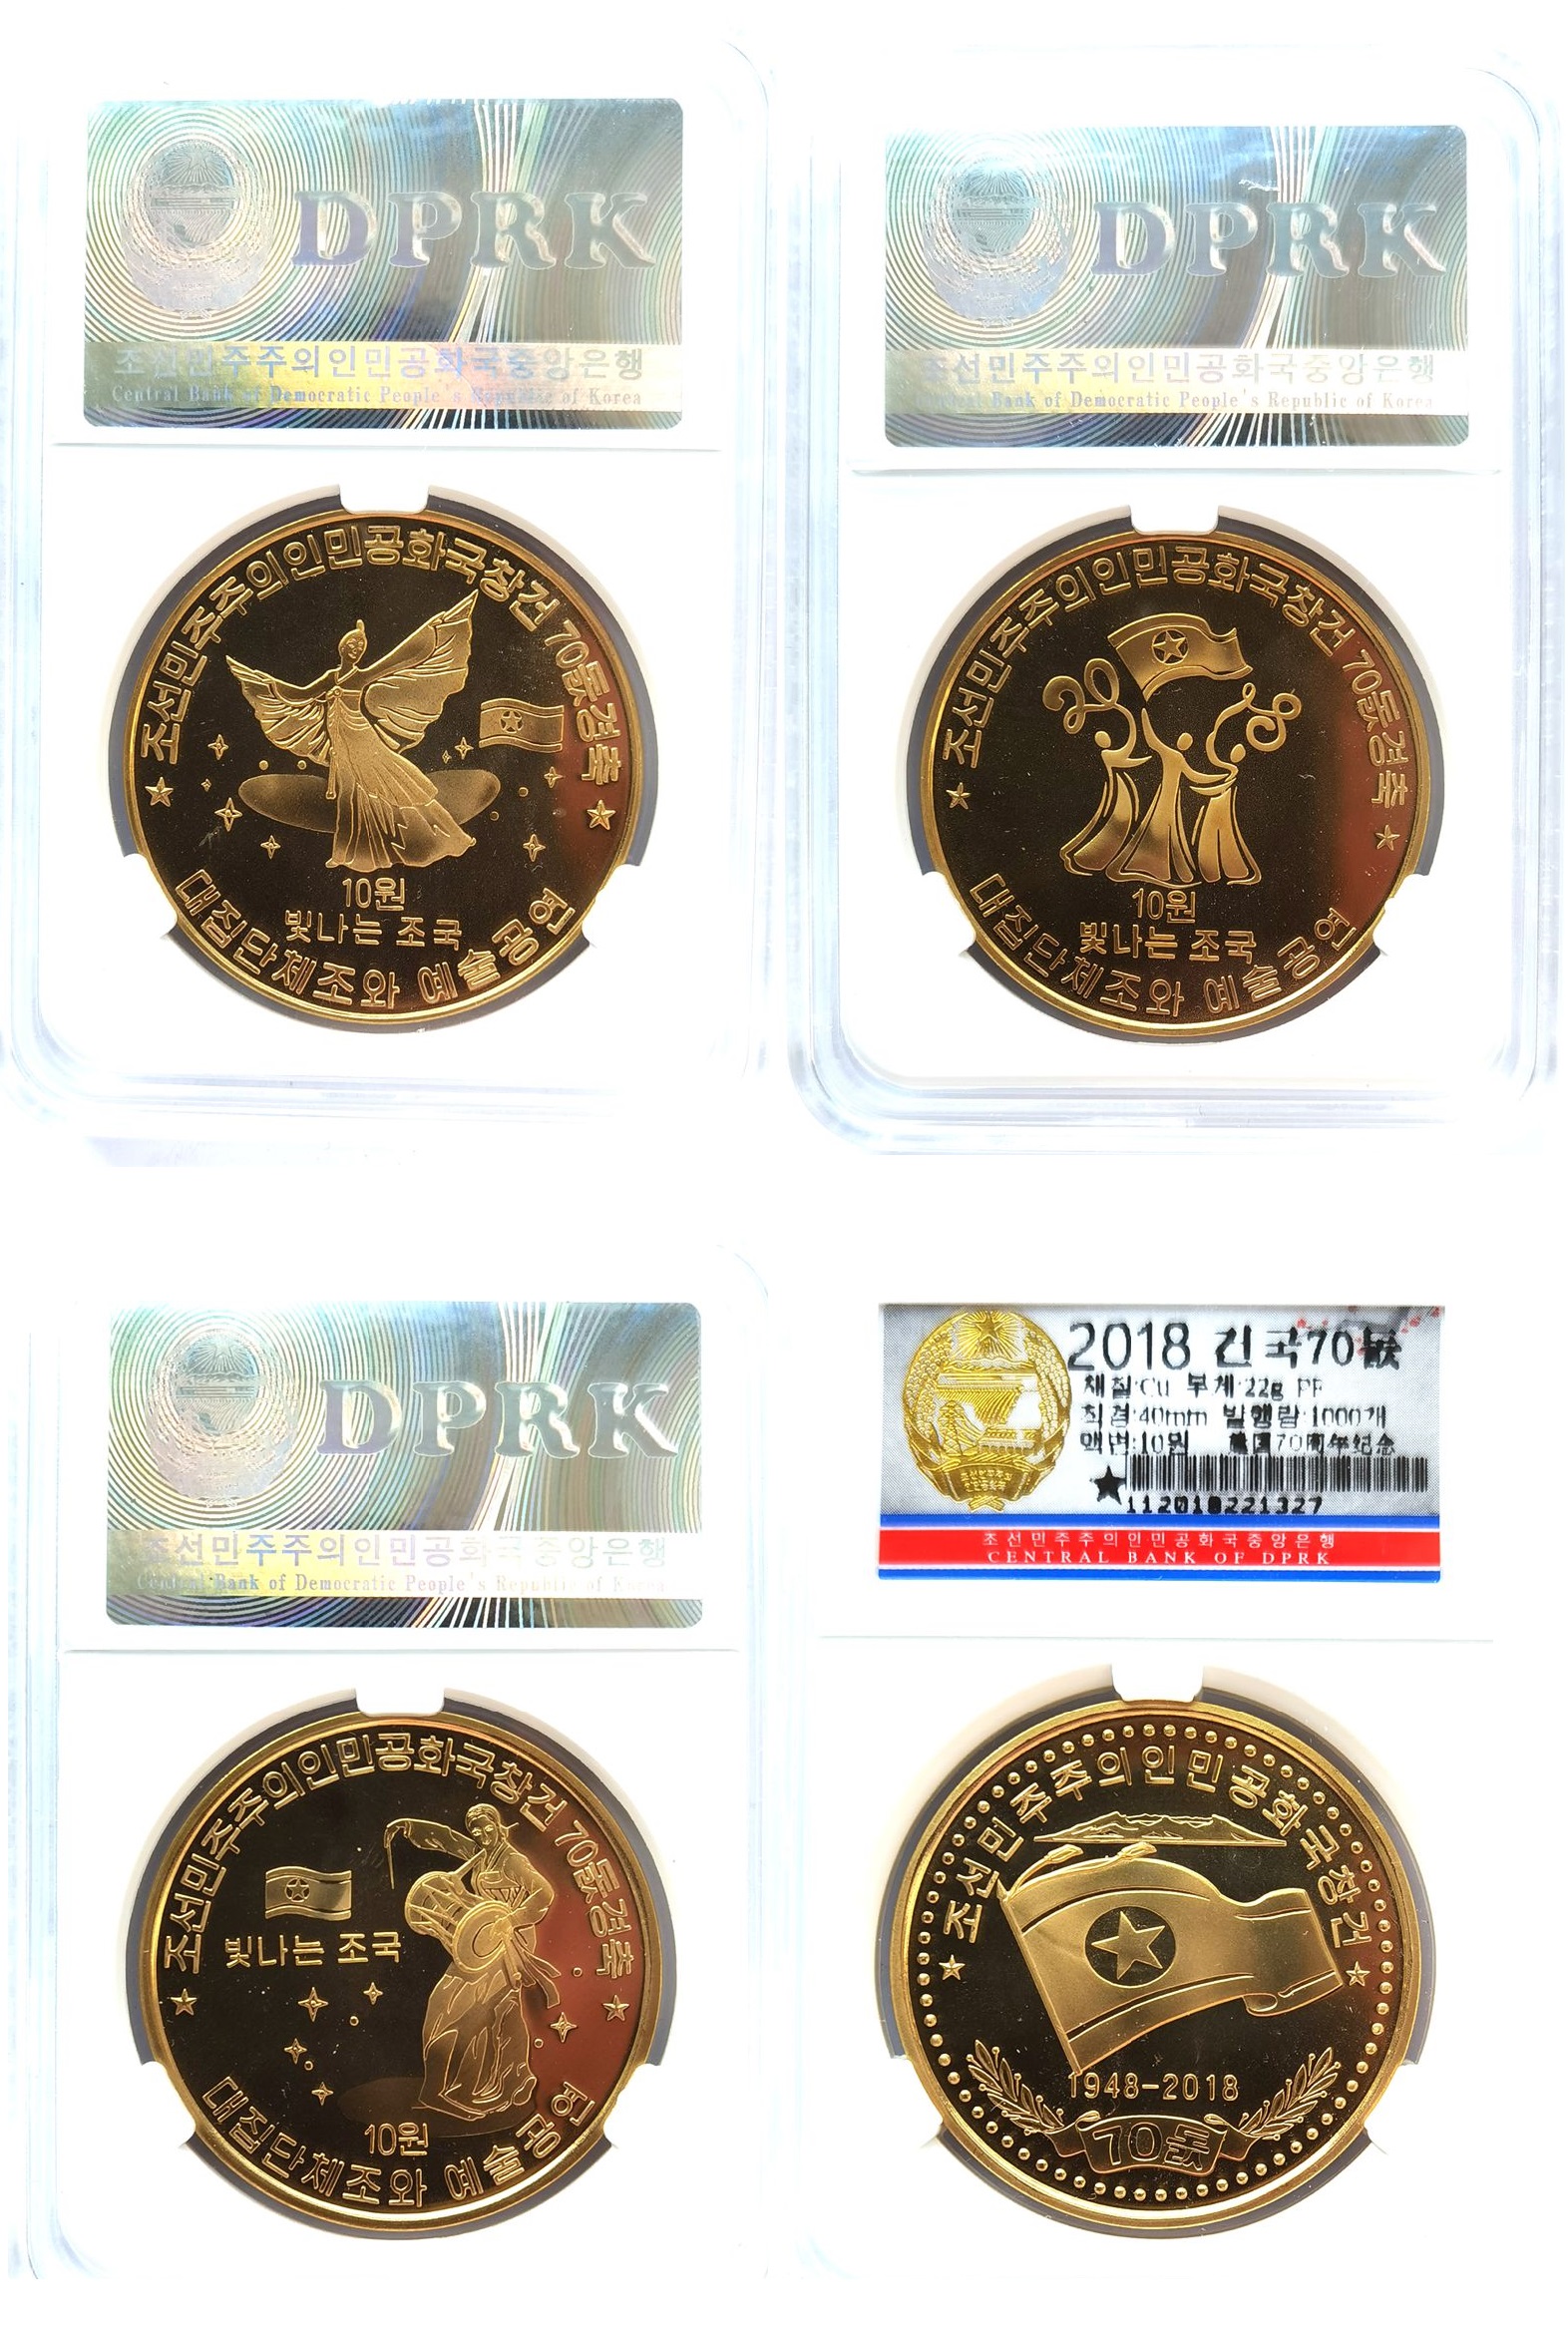 L7029, Korea Proof 3 pcs Coins "70tn Anni of DPRK", Brass 2018